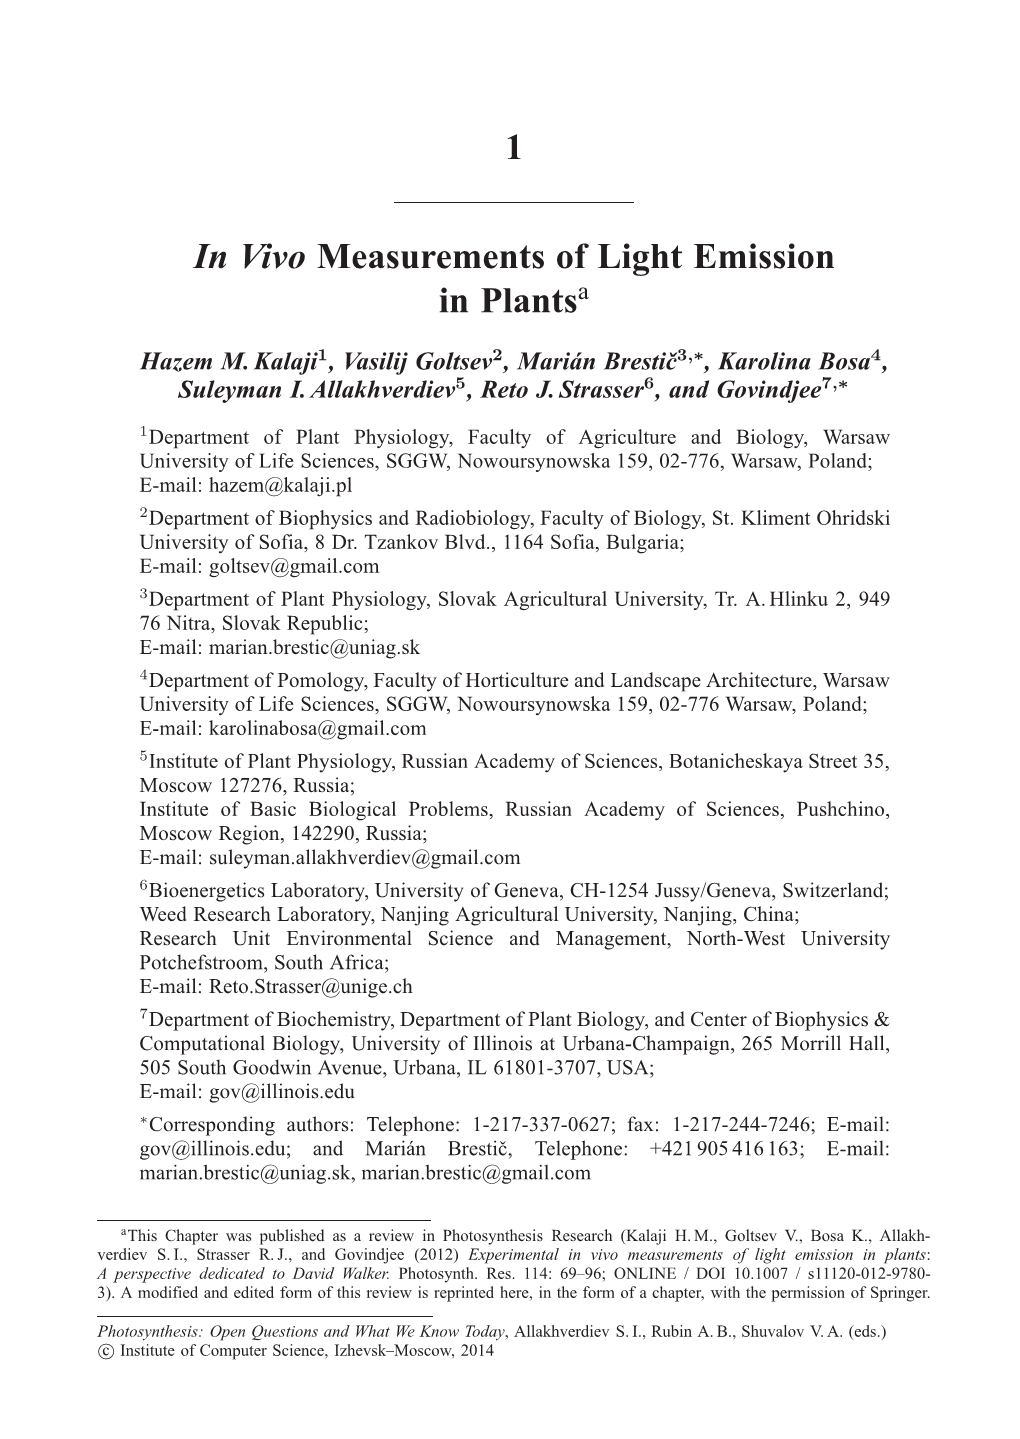 1 in Vivo Measurements of Light Emission in Plants